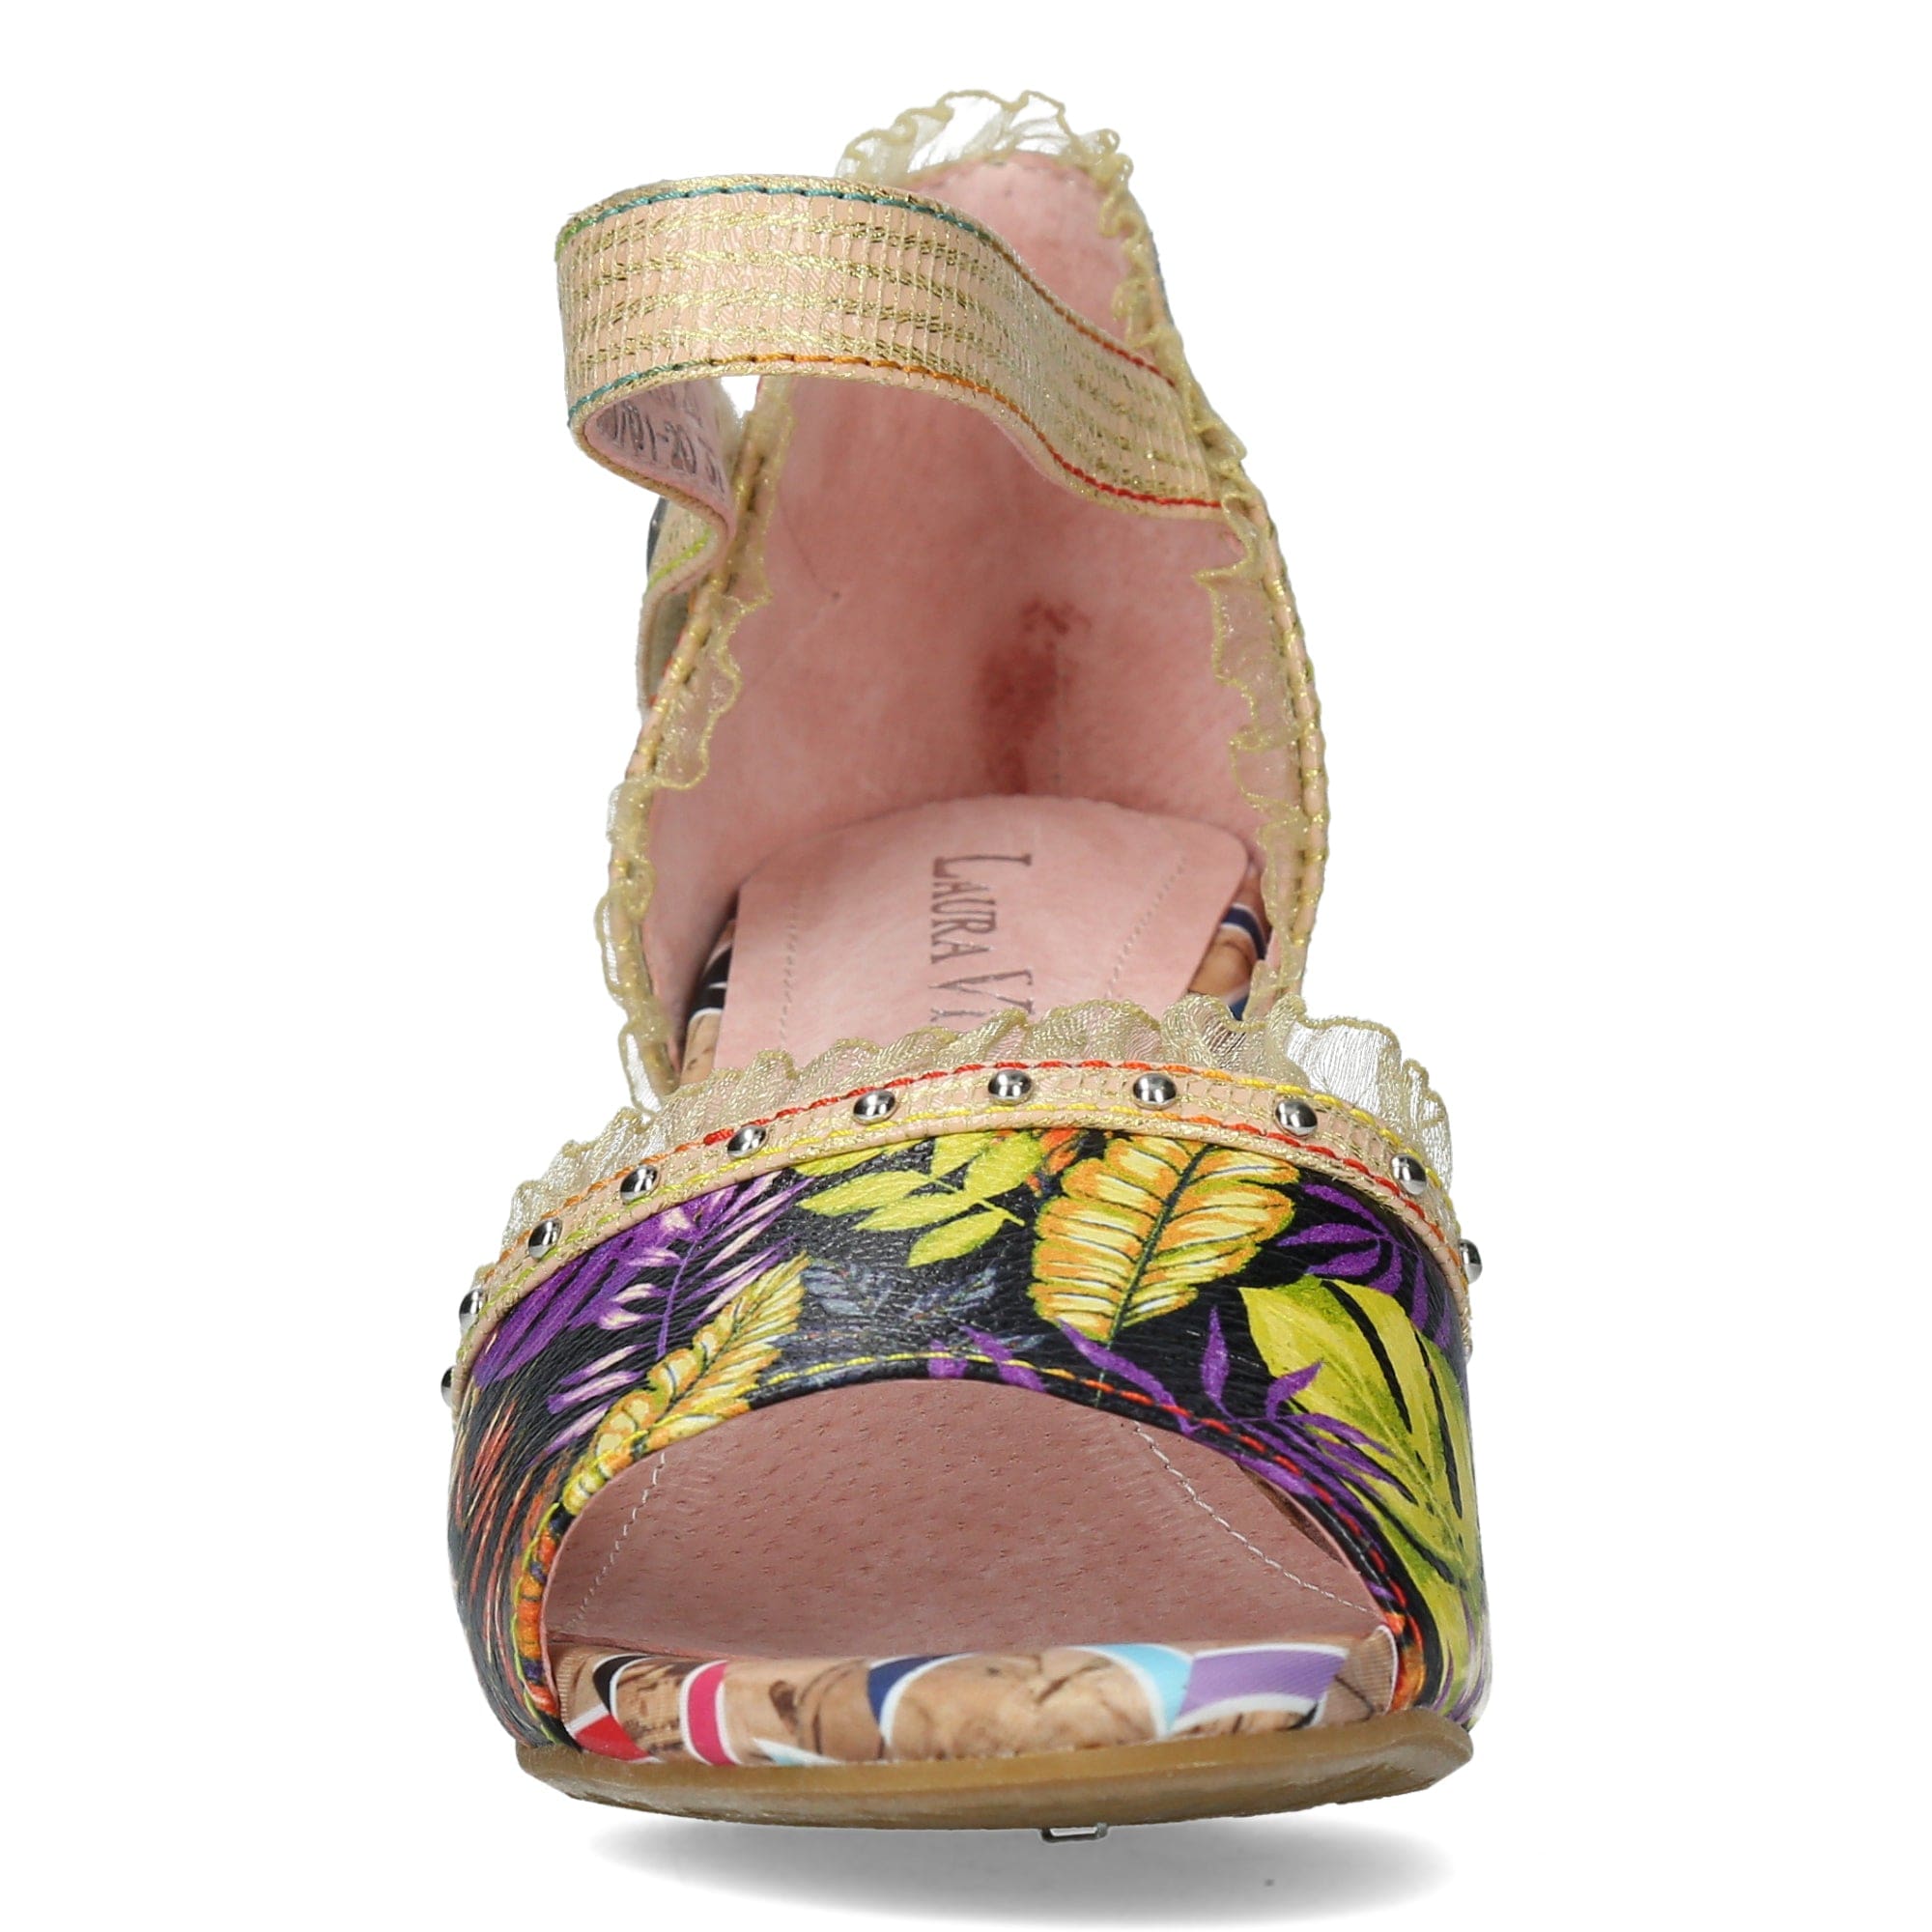 Chaussure HACKIO 20 - Sandale